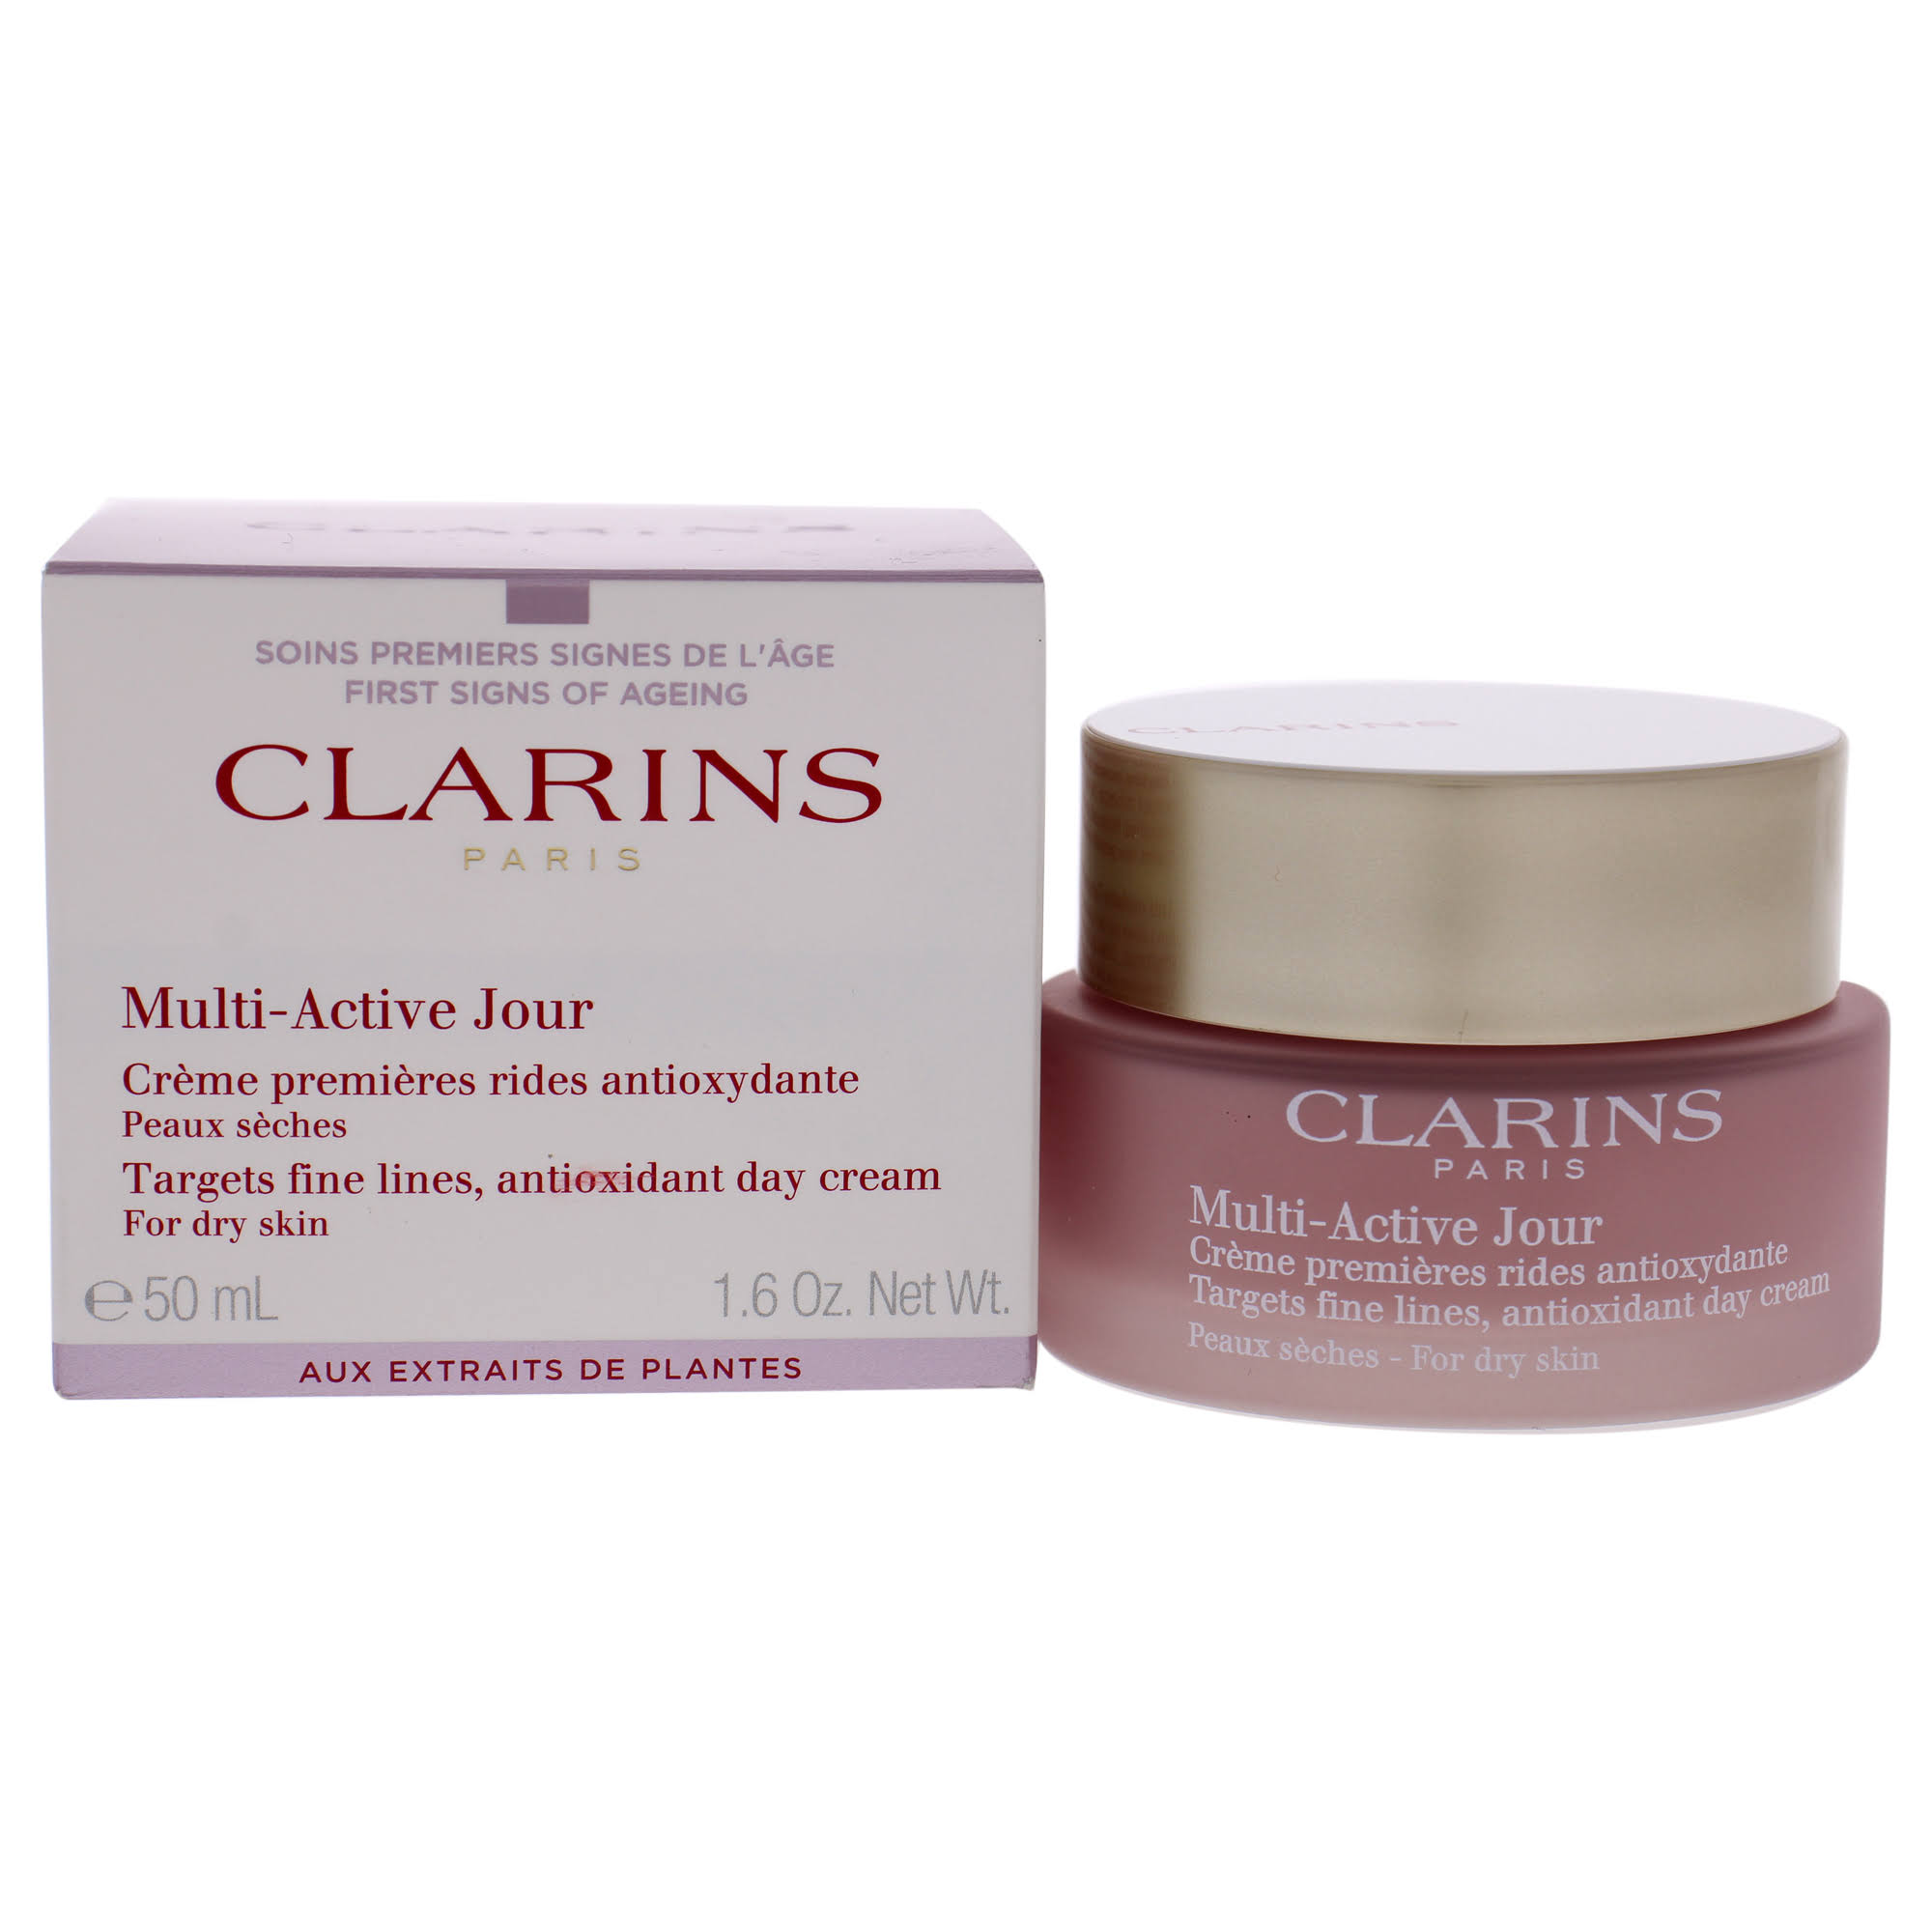 Clarins Multi-Active Day Cream - Dry Skin 1.6 oz.